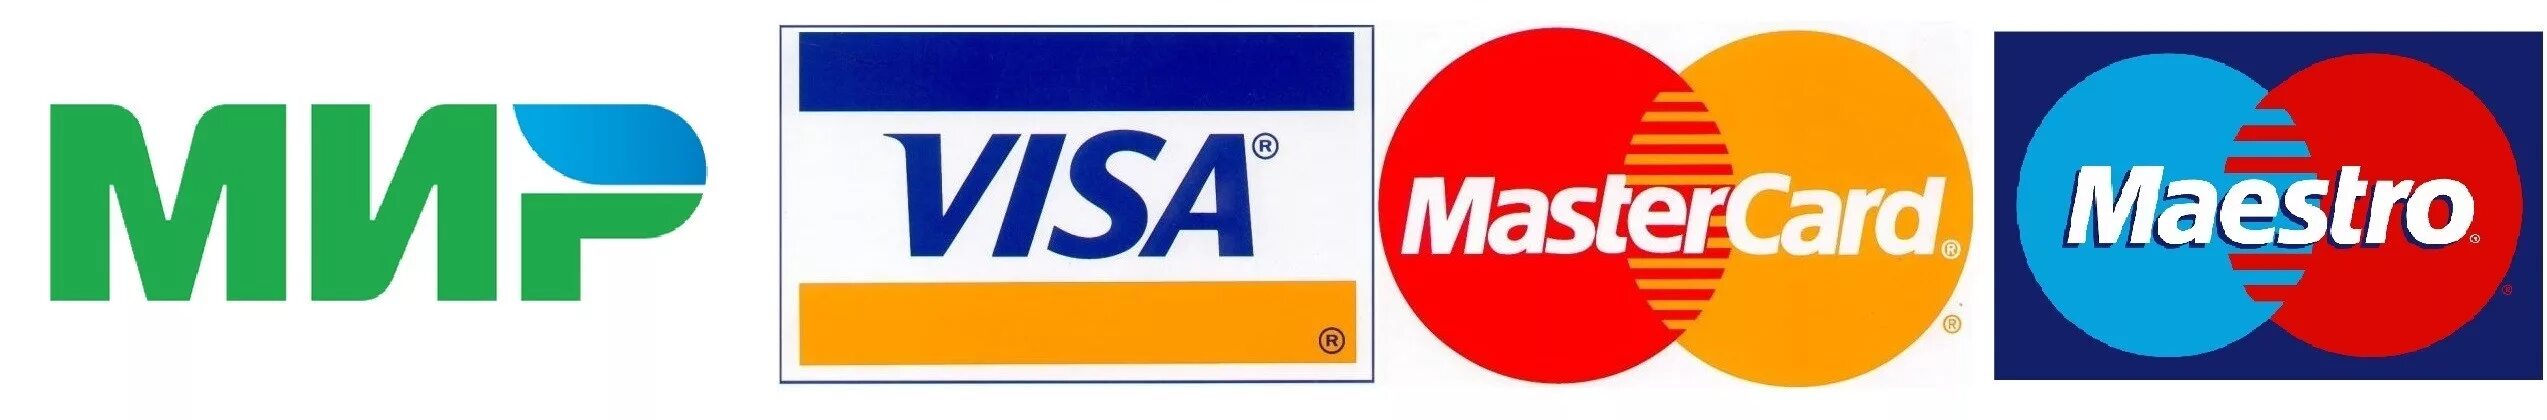 Система visa mastercard. Значок оплаты банковскими картами. Логотипы кредитных карт. Логотипы платежных систем. Карты виза и Мастеркард.